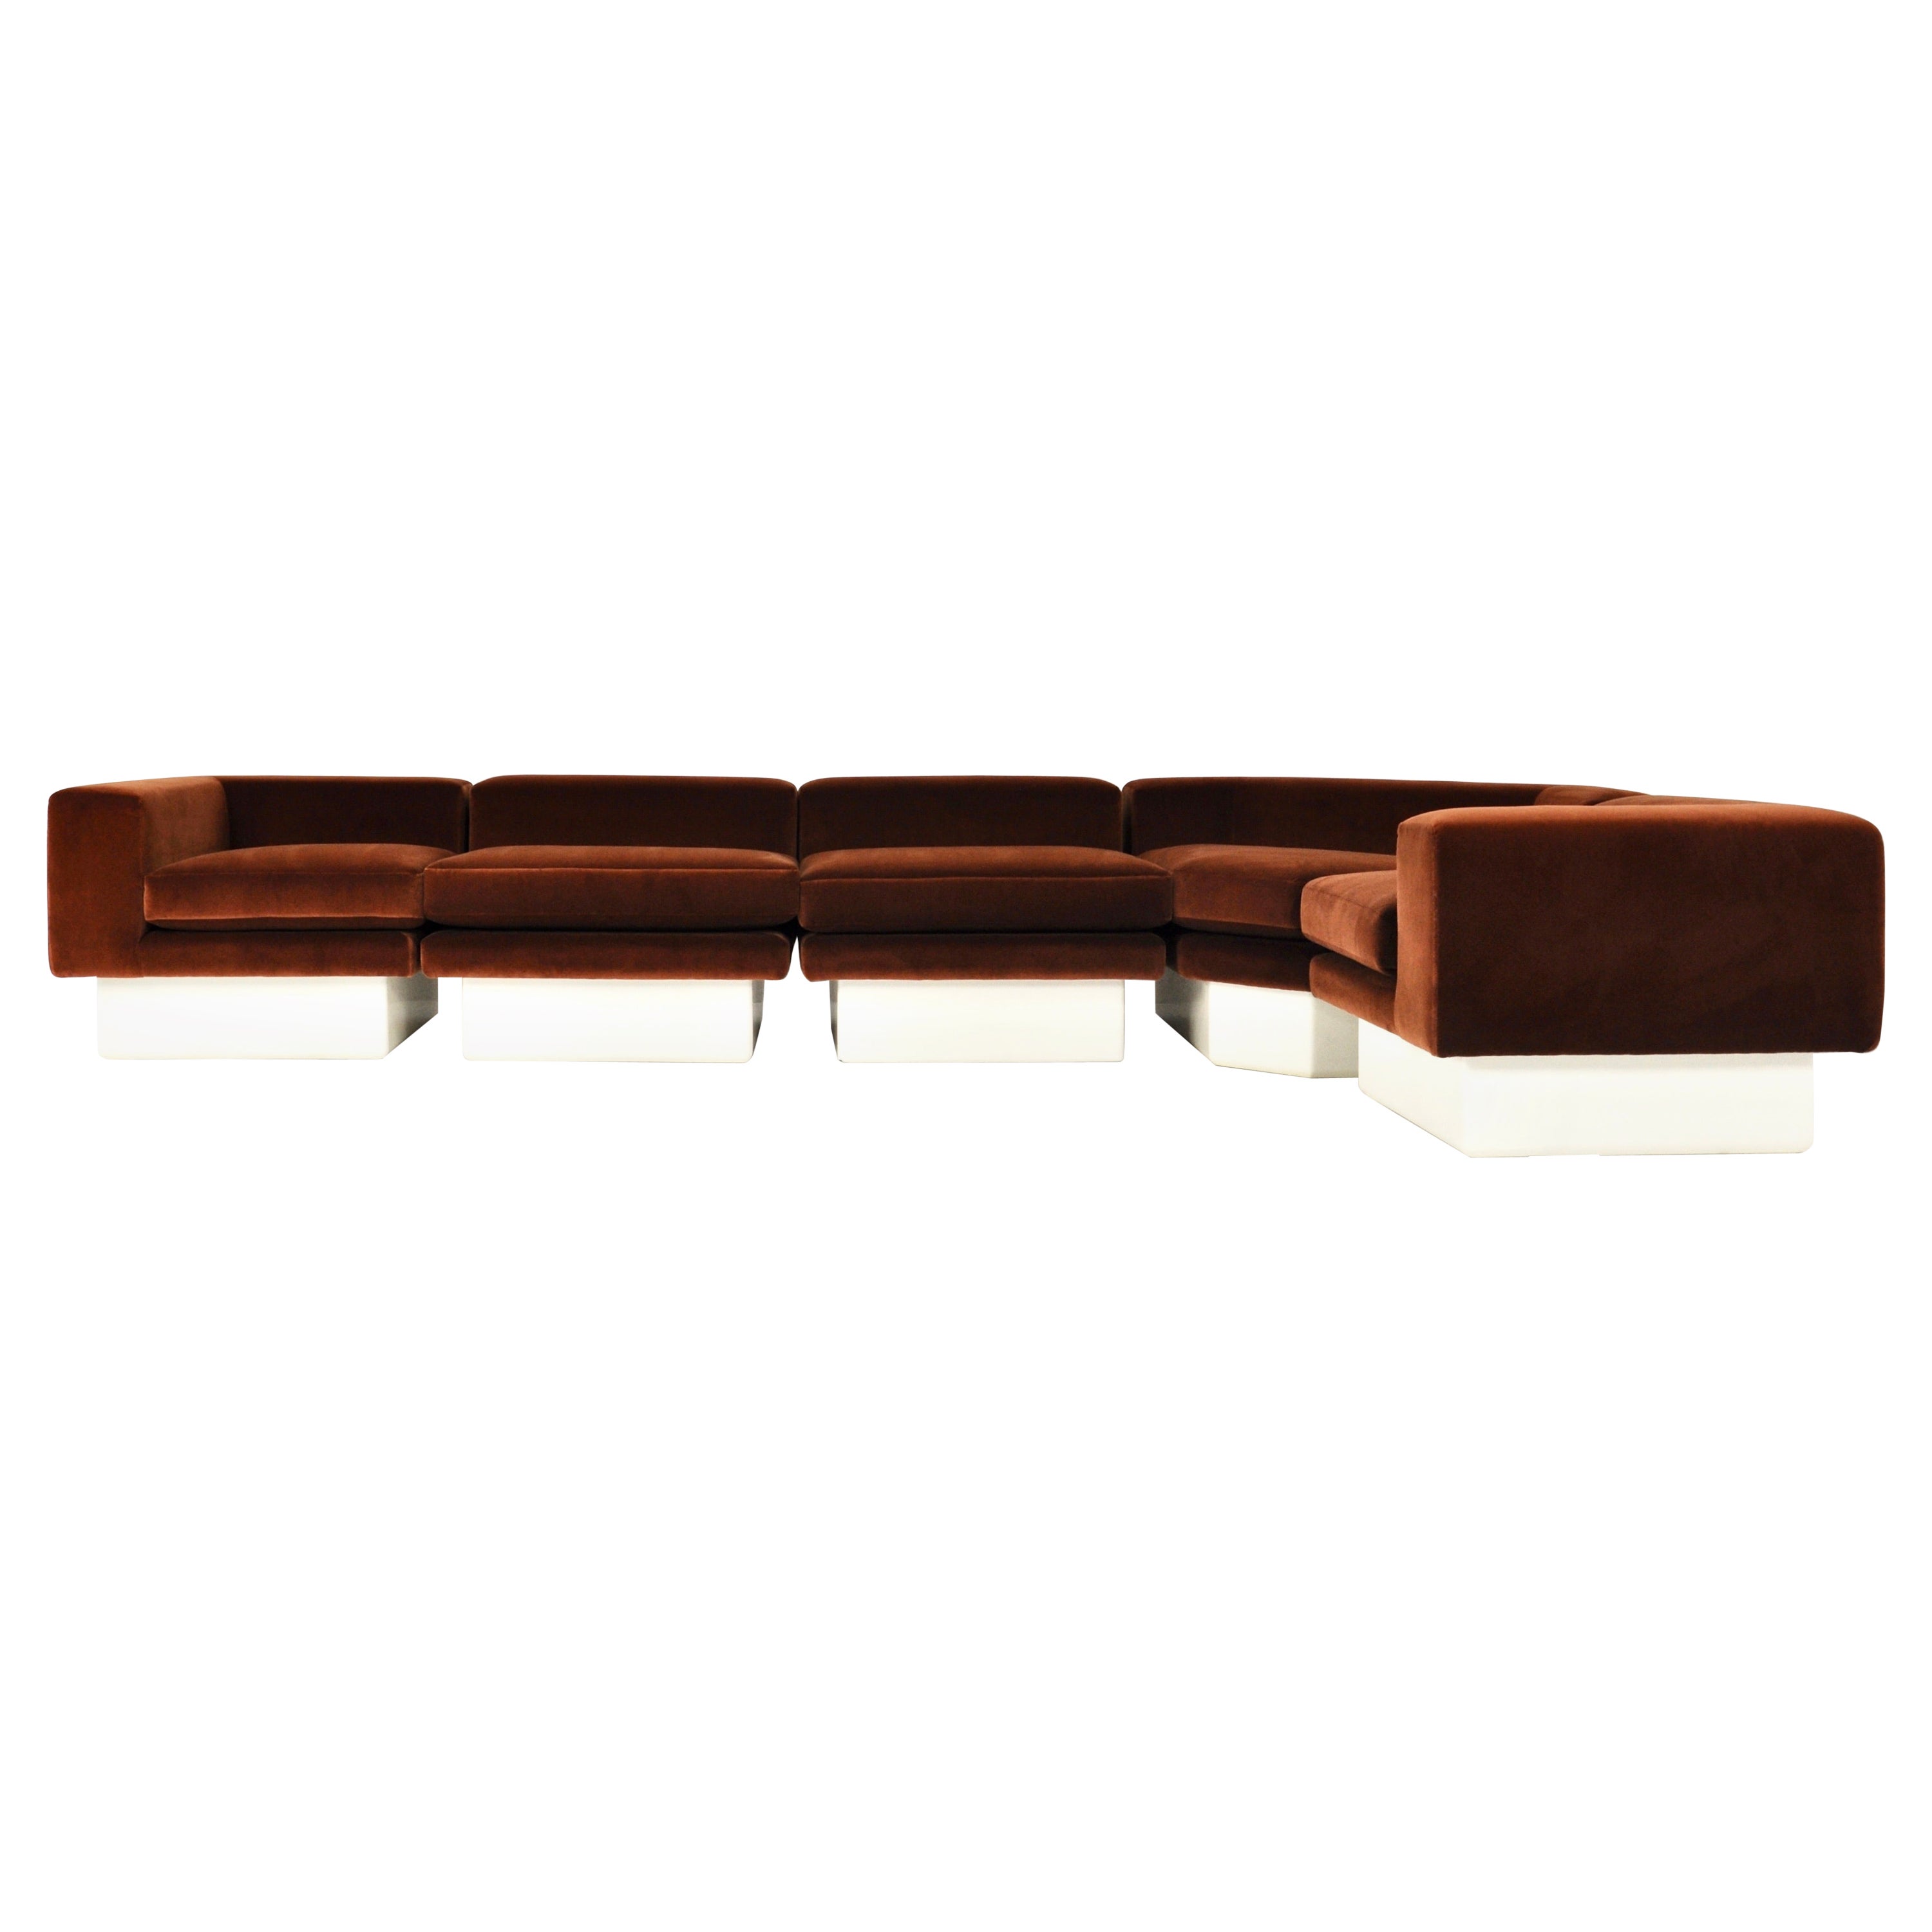 Italienisches modulares Sofa, 1980er Jahre